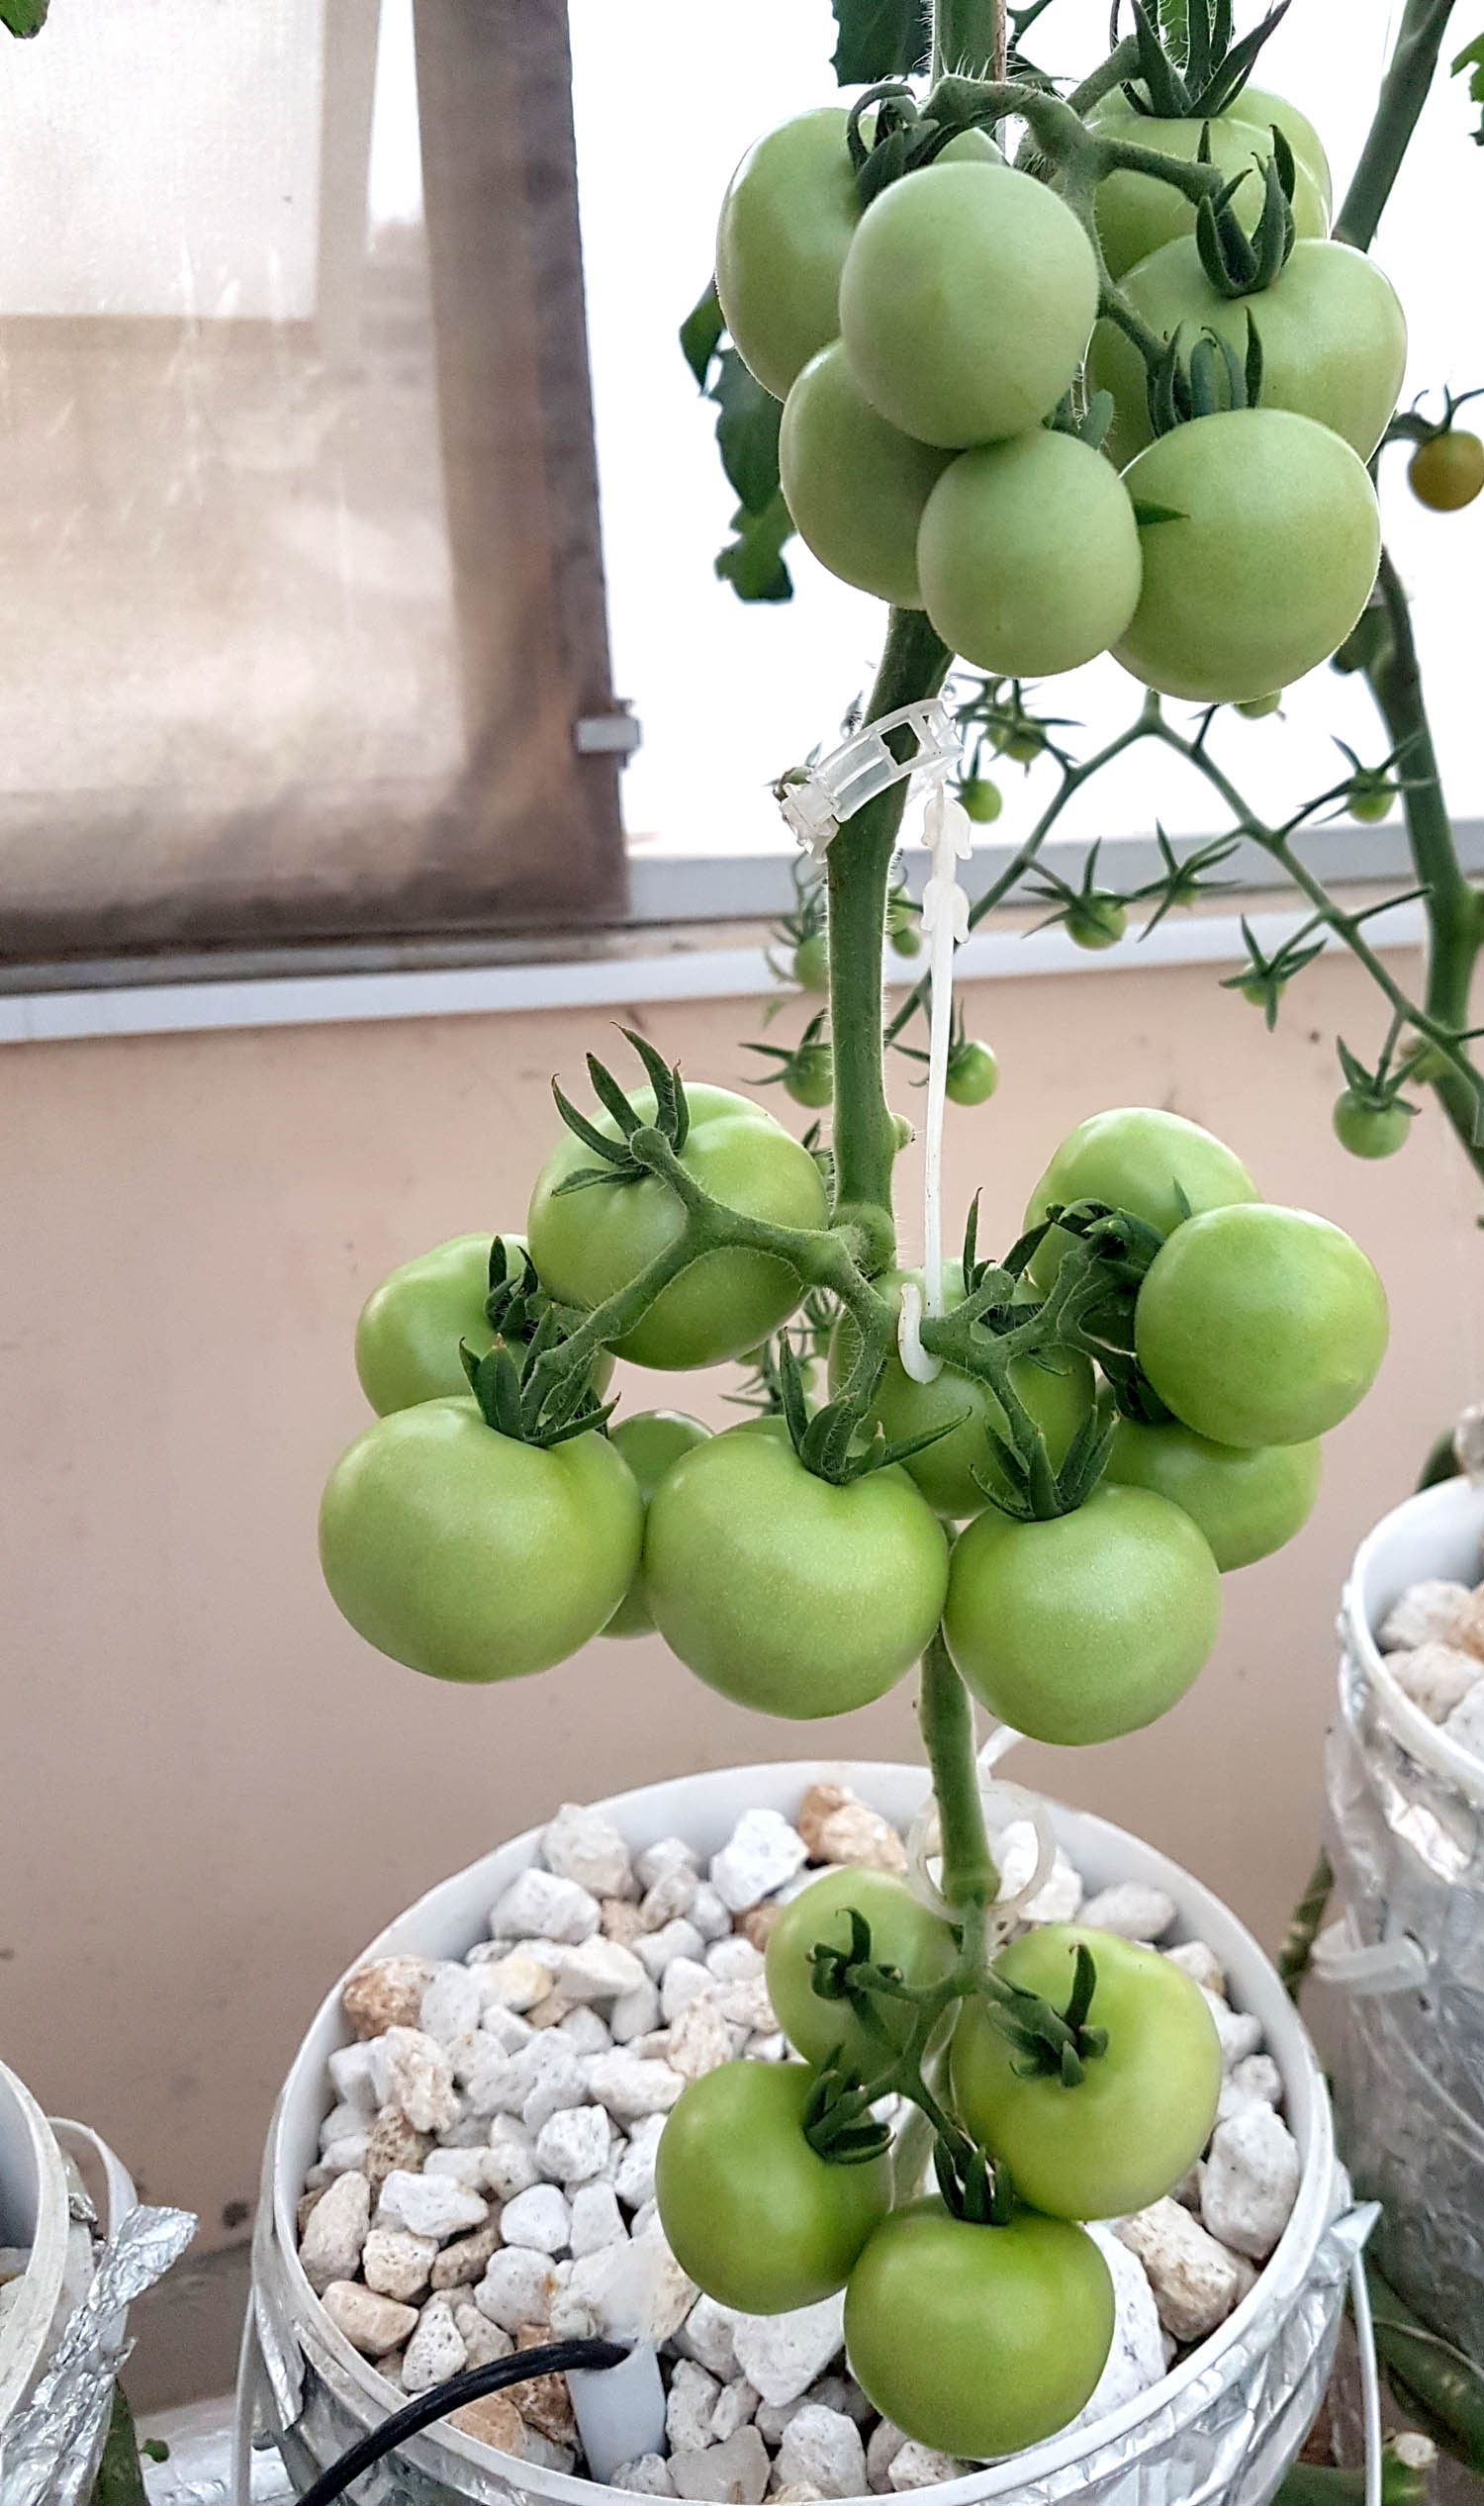 Tomato-Hellfrucht-German-Variety-Pakistan-Hydroponics